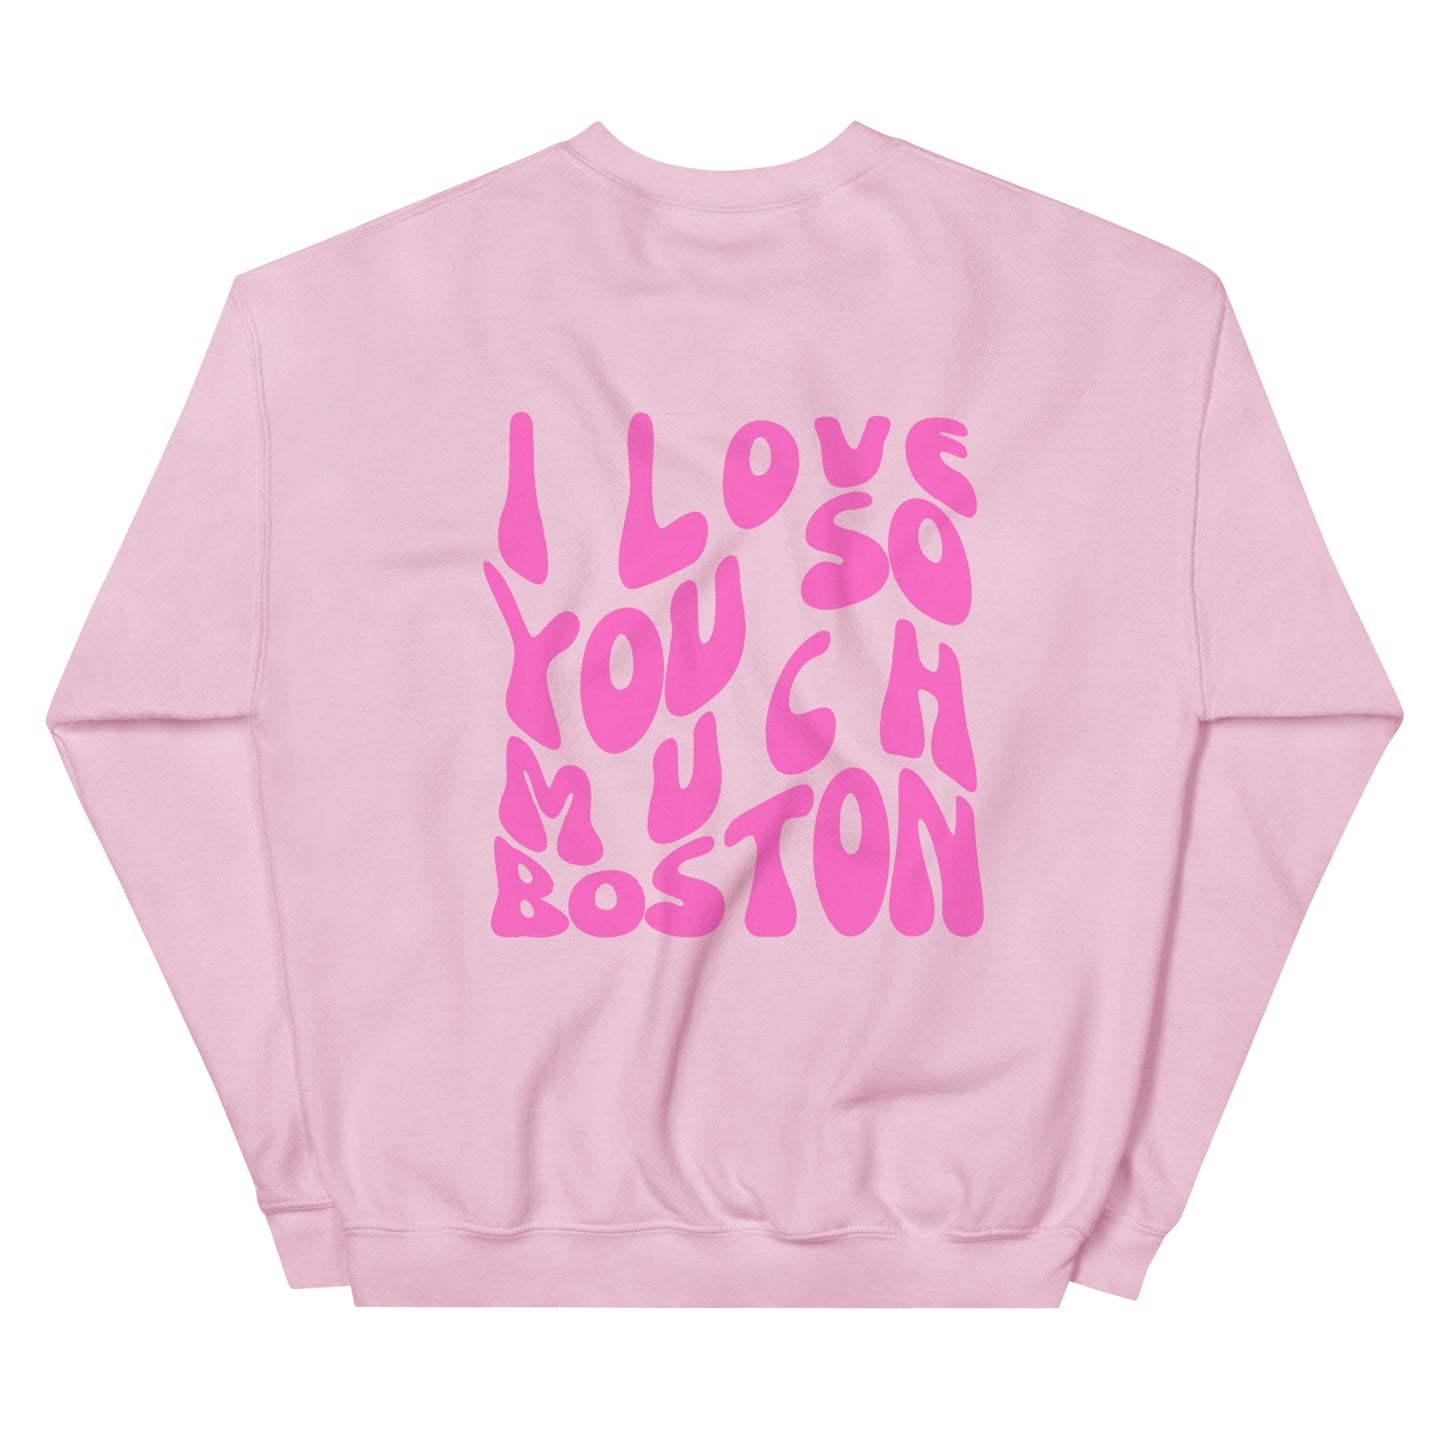 I LOVE YOU SO MUCH BOSTON Crewneck Sweatshirt